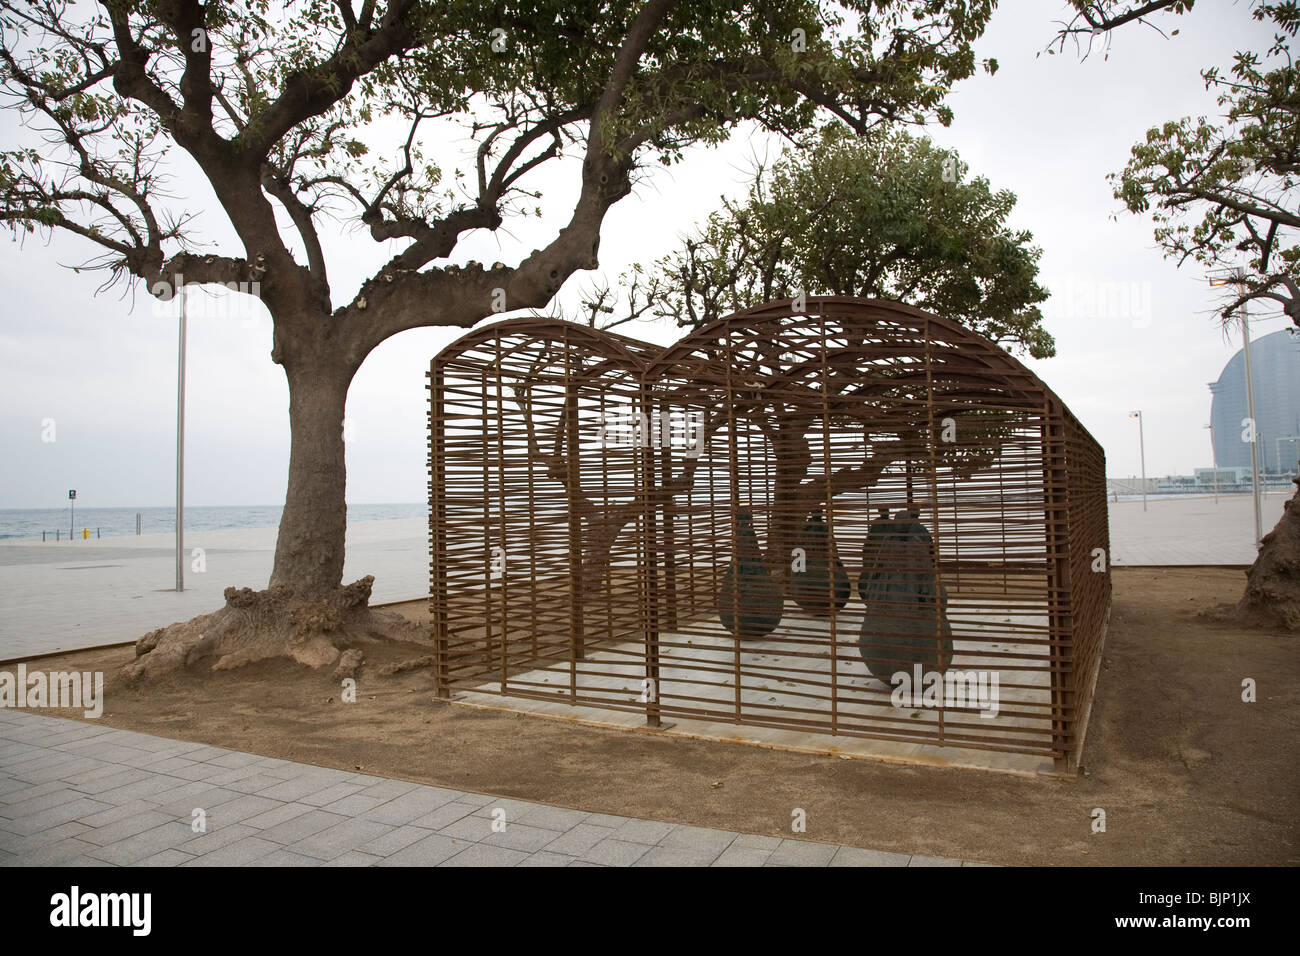 'Una habitacion donde siempre llueve' (A room were it always rains) - Sculpture by Juan Muñoz - Barceloneta Stock Photo